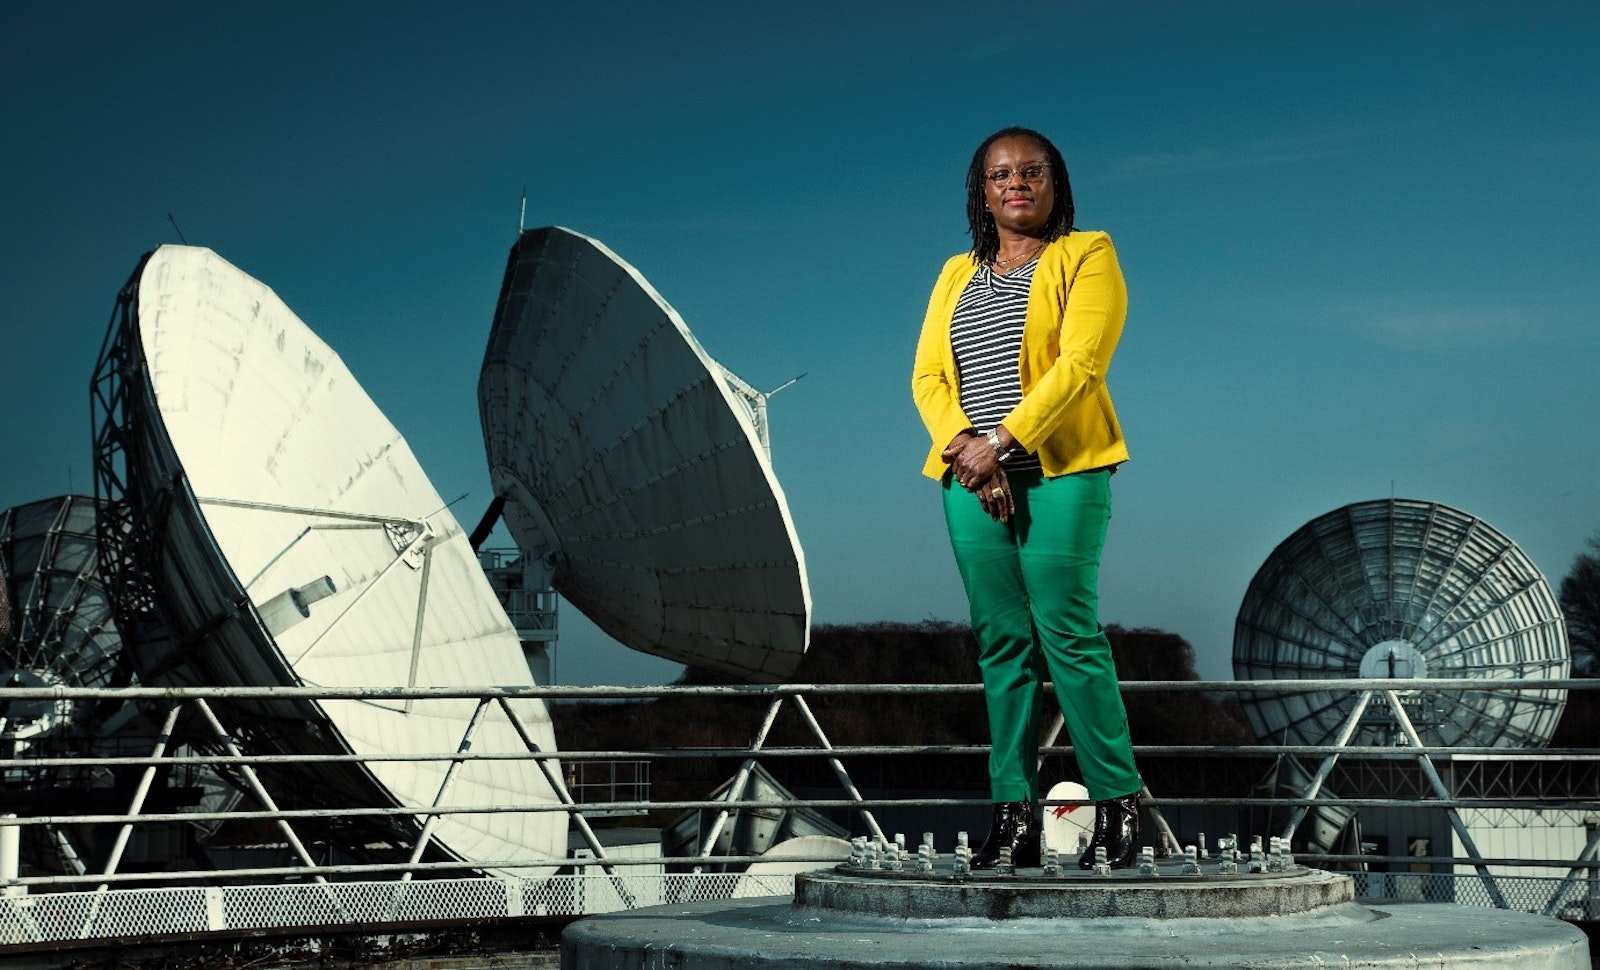  Vodafone’s Senior Manager of Satellite Engineering Cynthia Osuigwe standing next to the satellites